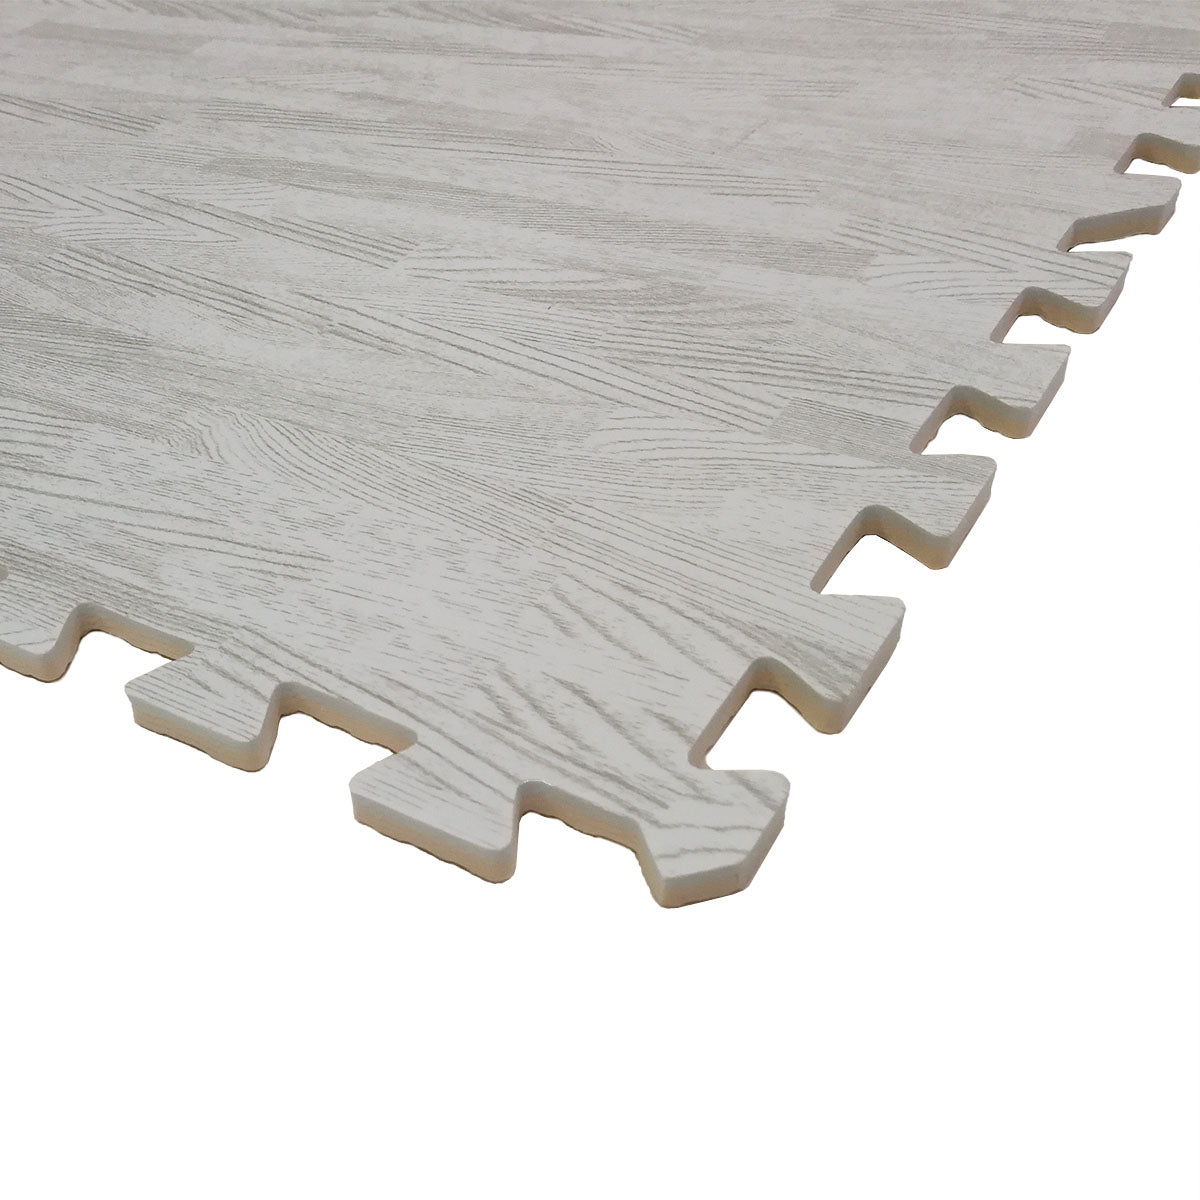 Home Aesthetics 100 Sqft 3/8 White Wood Grain Foam Mat Interlocking Flooring 2'x2' 25pcs